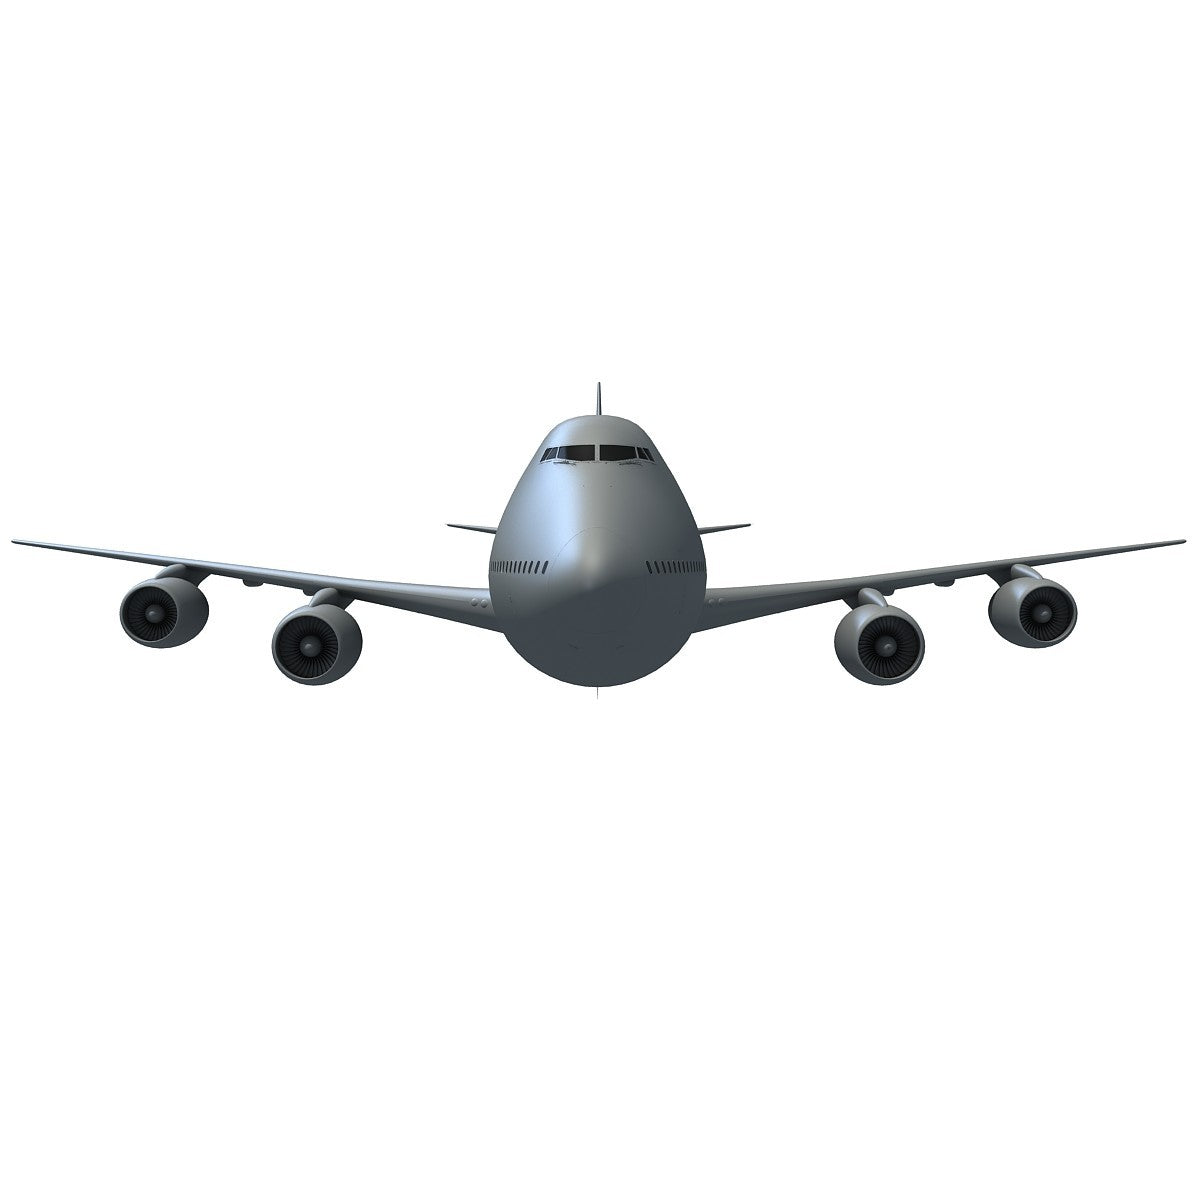 Aircraft 3D Scene